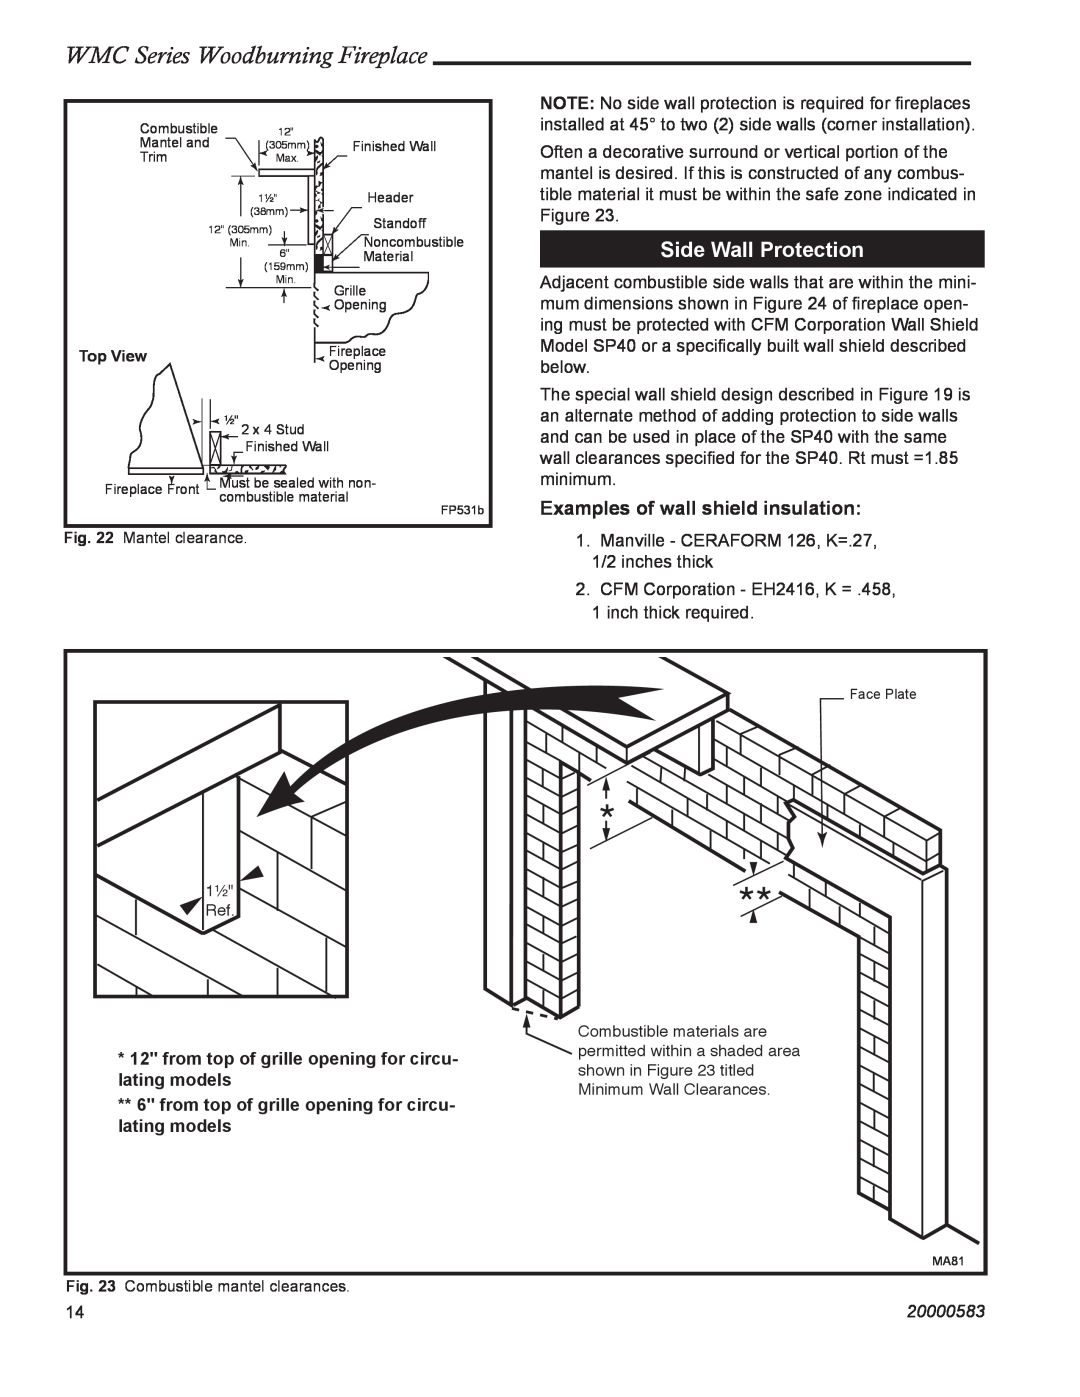 CFM Corporation WMC36 WMC42 WMC Series Woodburning Fireplace, Side Wall Protection, Examples of wall shield insulation 